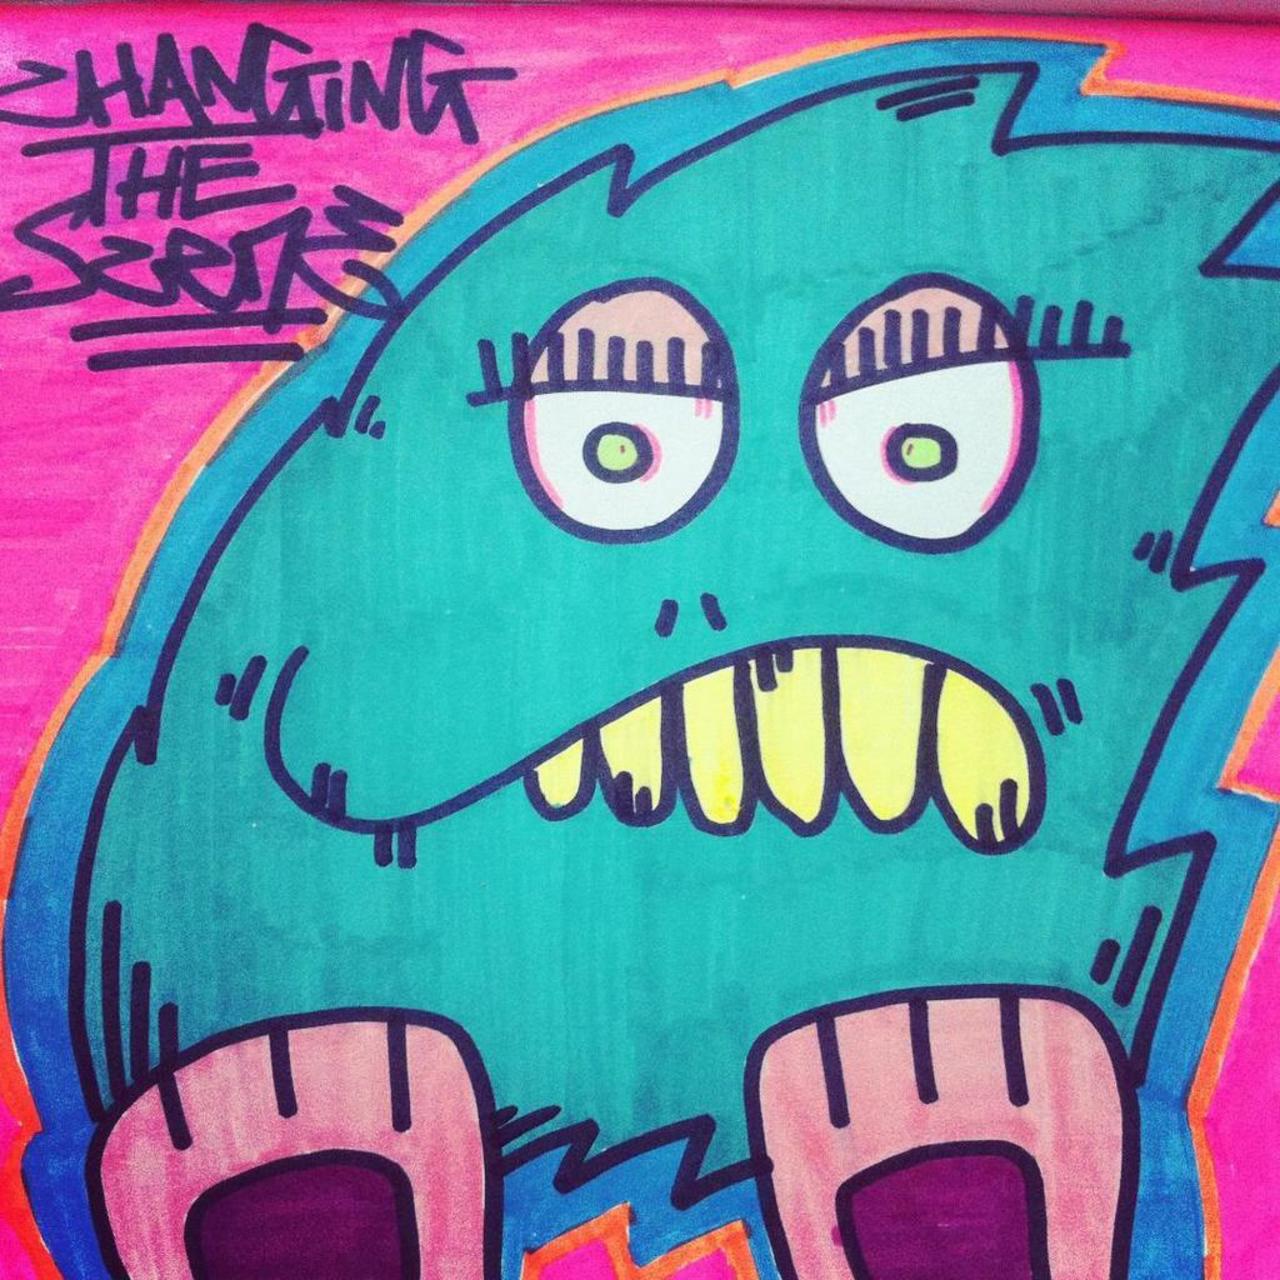 #stickers #Graffiti #Art #StreetArt  #BlackBook #Changing #The #Scene #CTS #Giving #London #Colour #GLC #Non #Stop … http://t.co/AP9MrTji1v